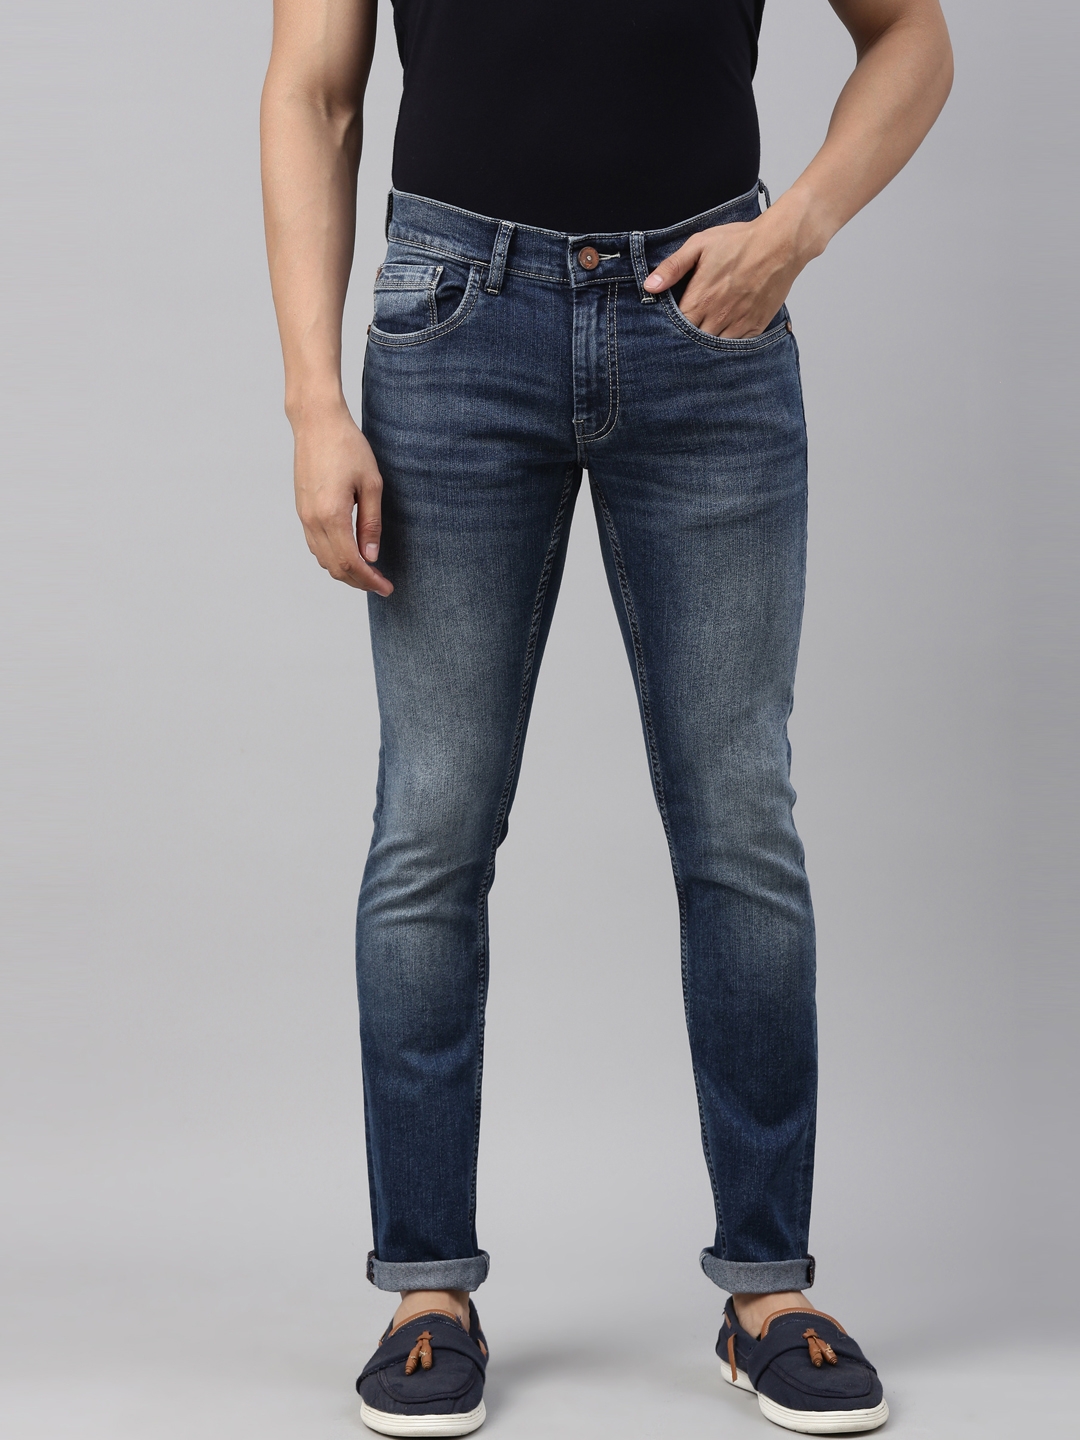 American Bull | American Bull Mens Denim Jeans With 5 Pockets